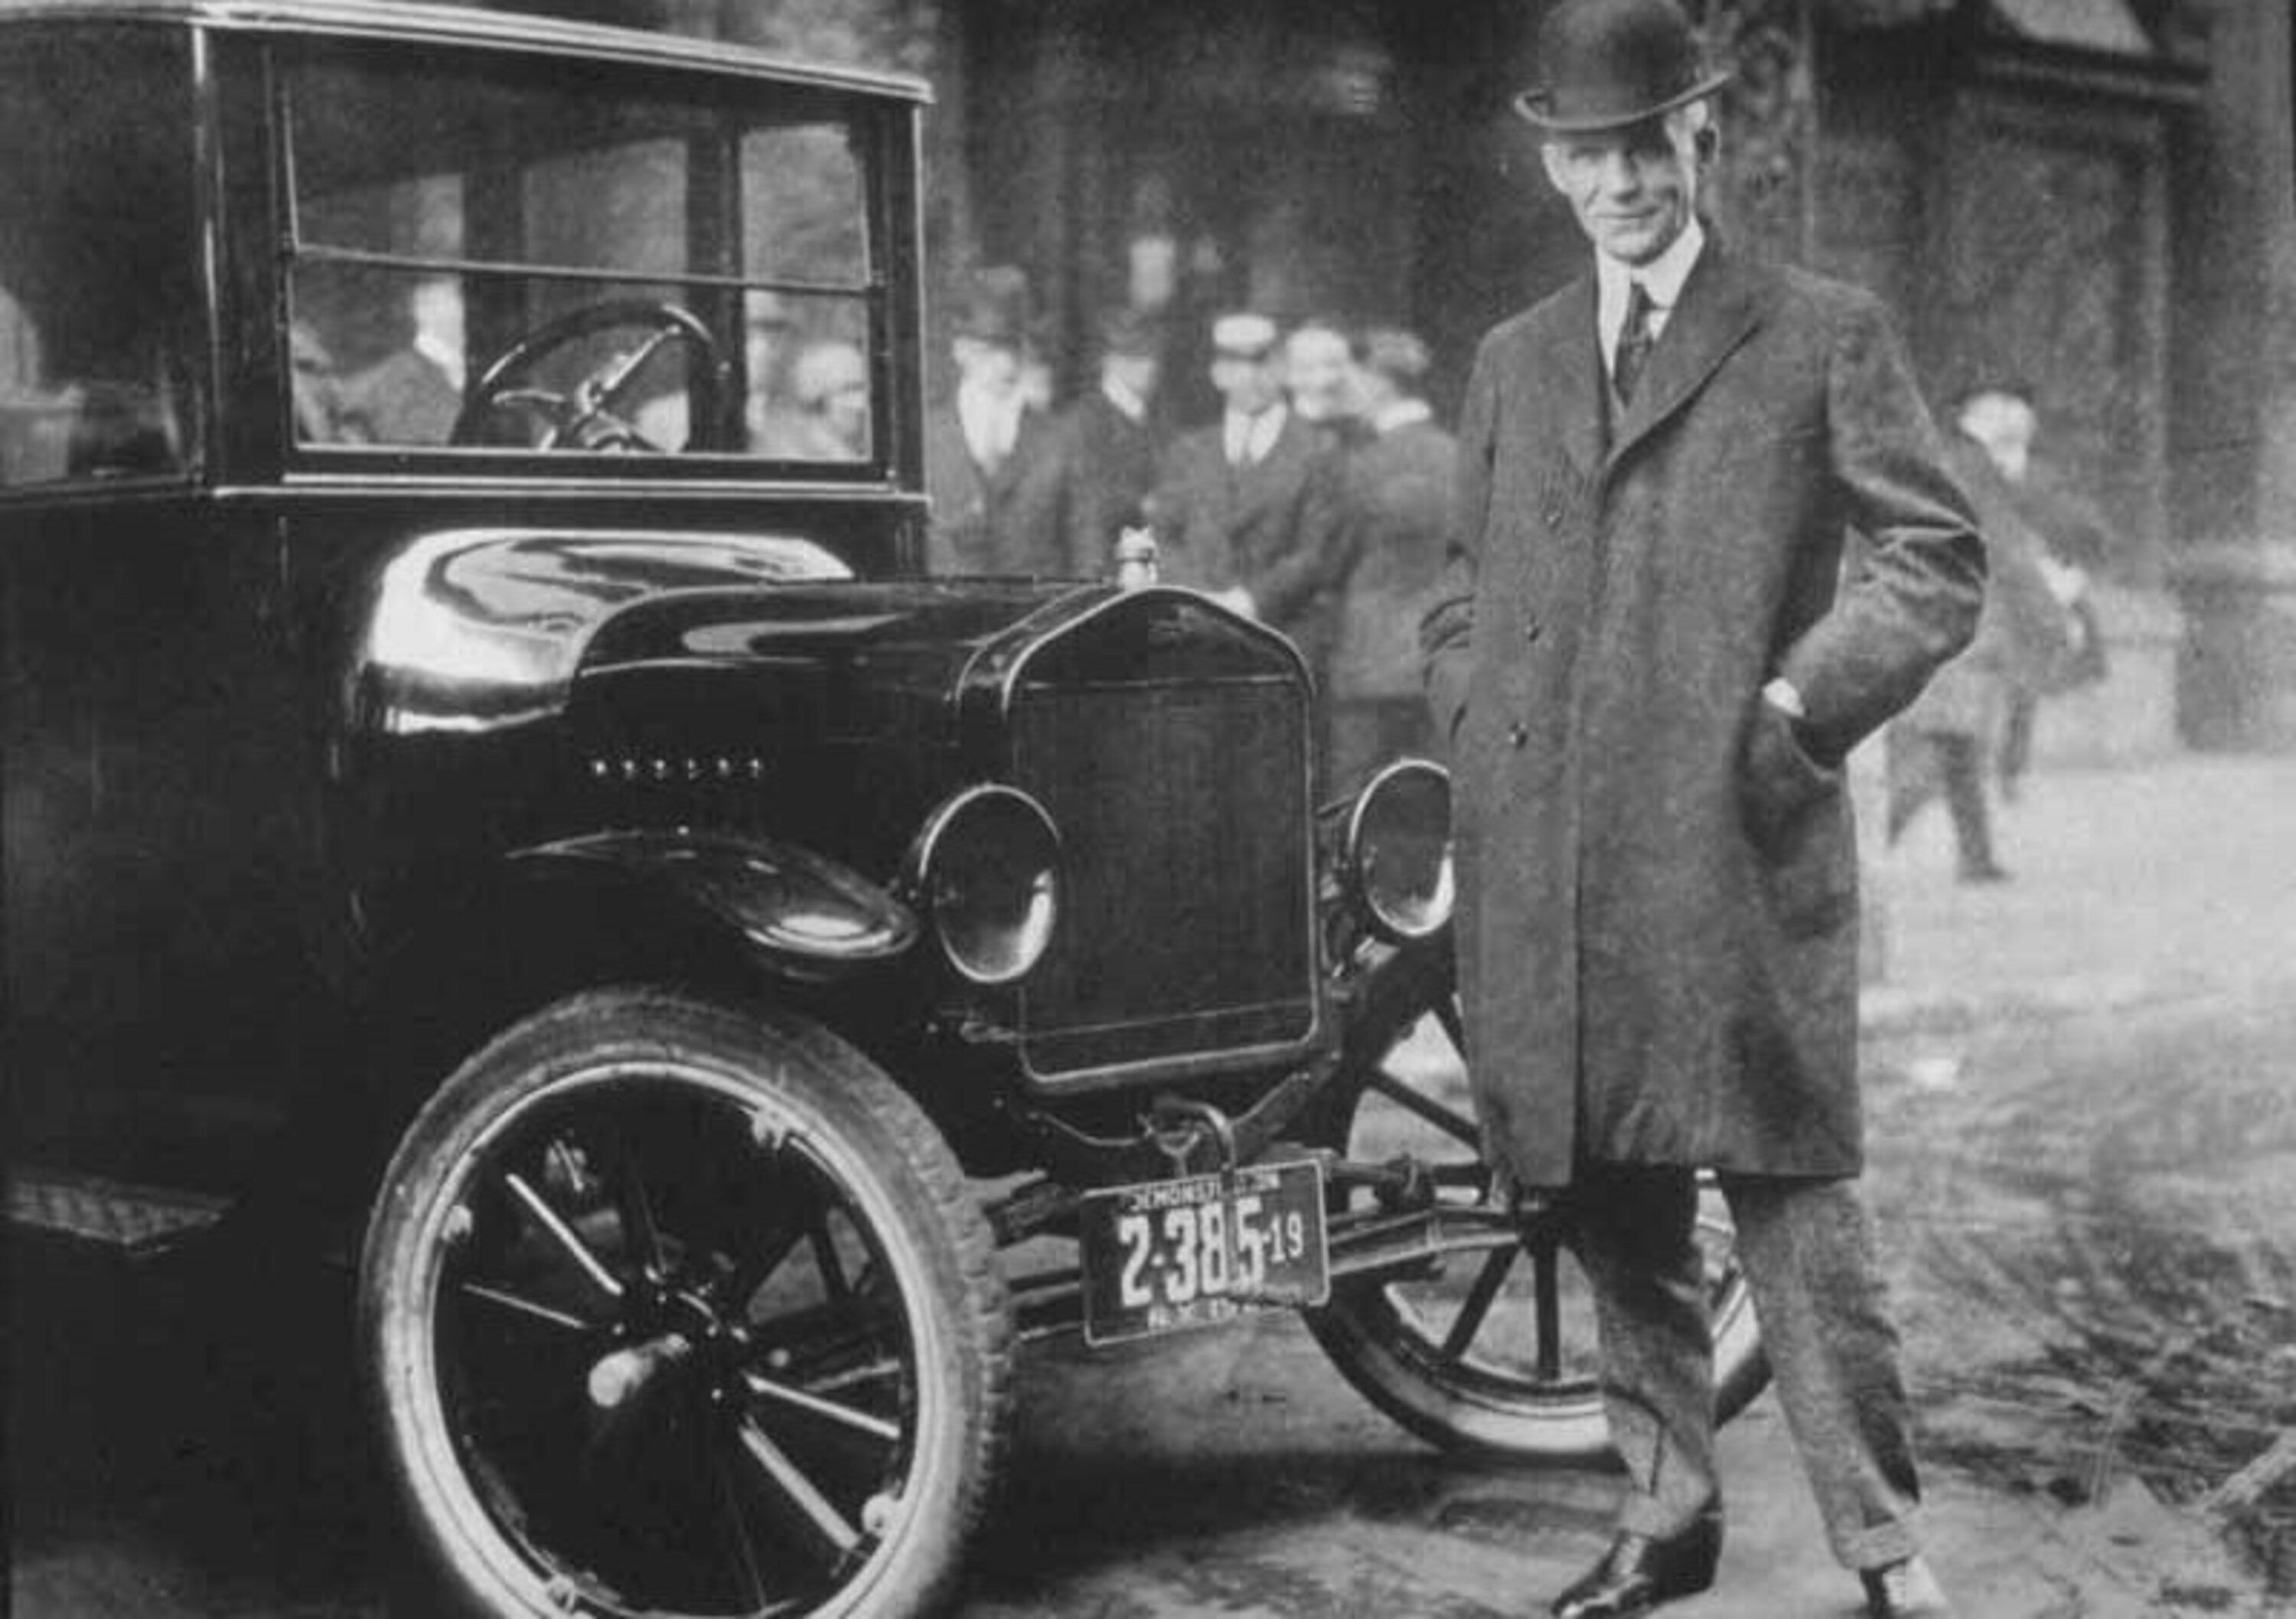 Nati oggi, 1863: Henry Ford